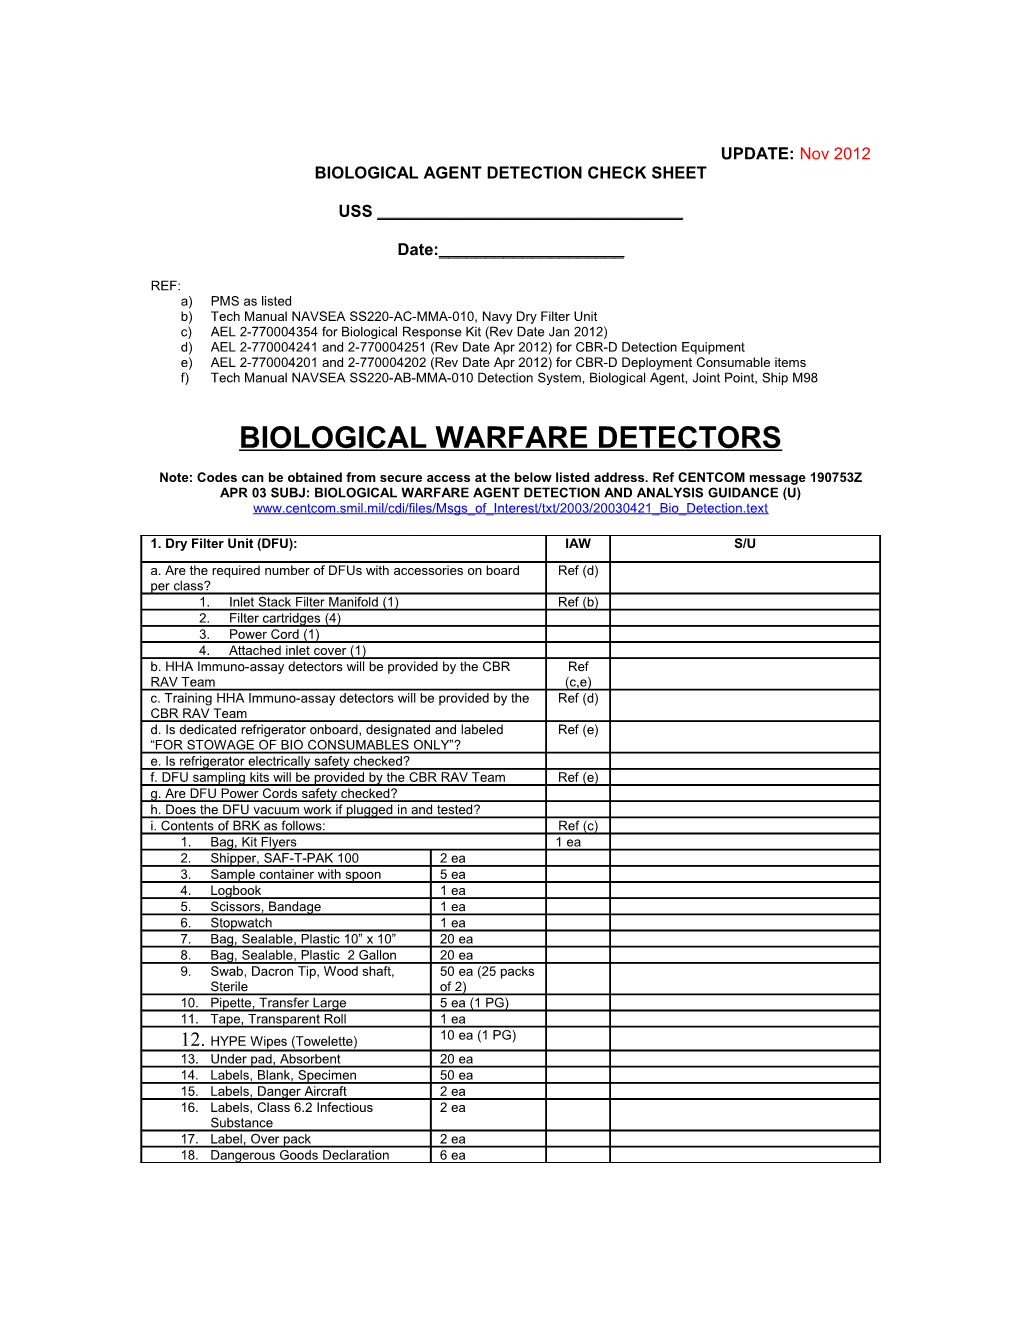 Biological Agent Detection Check Sheet (Cont D)